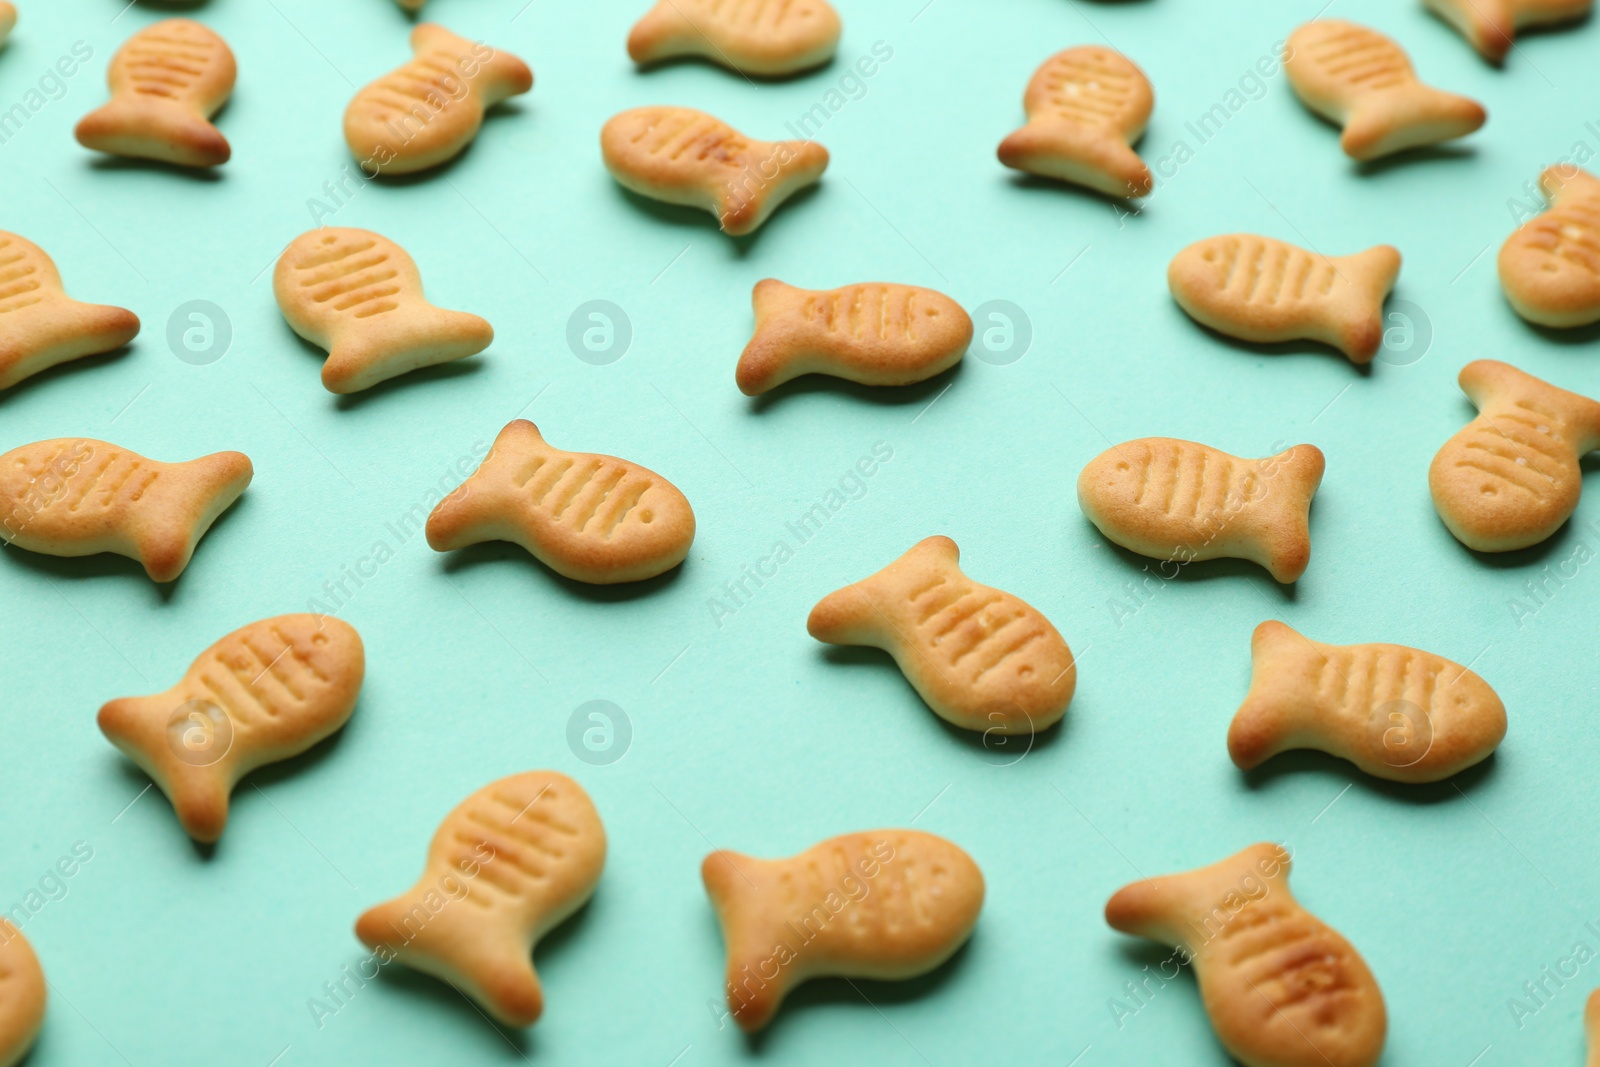 Photo of Delicious goldfish crackers on turquoise background, closeup